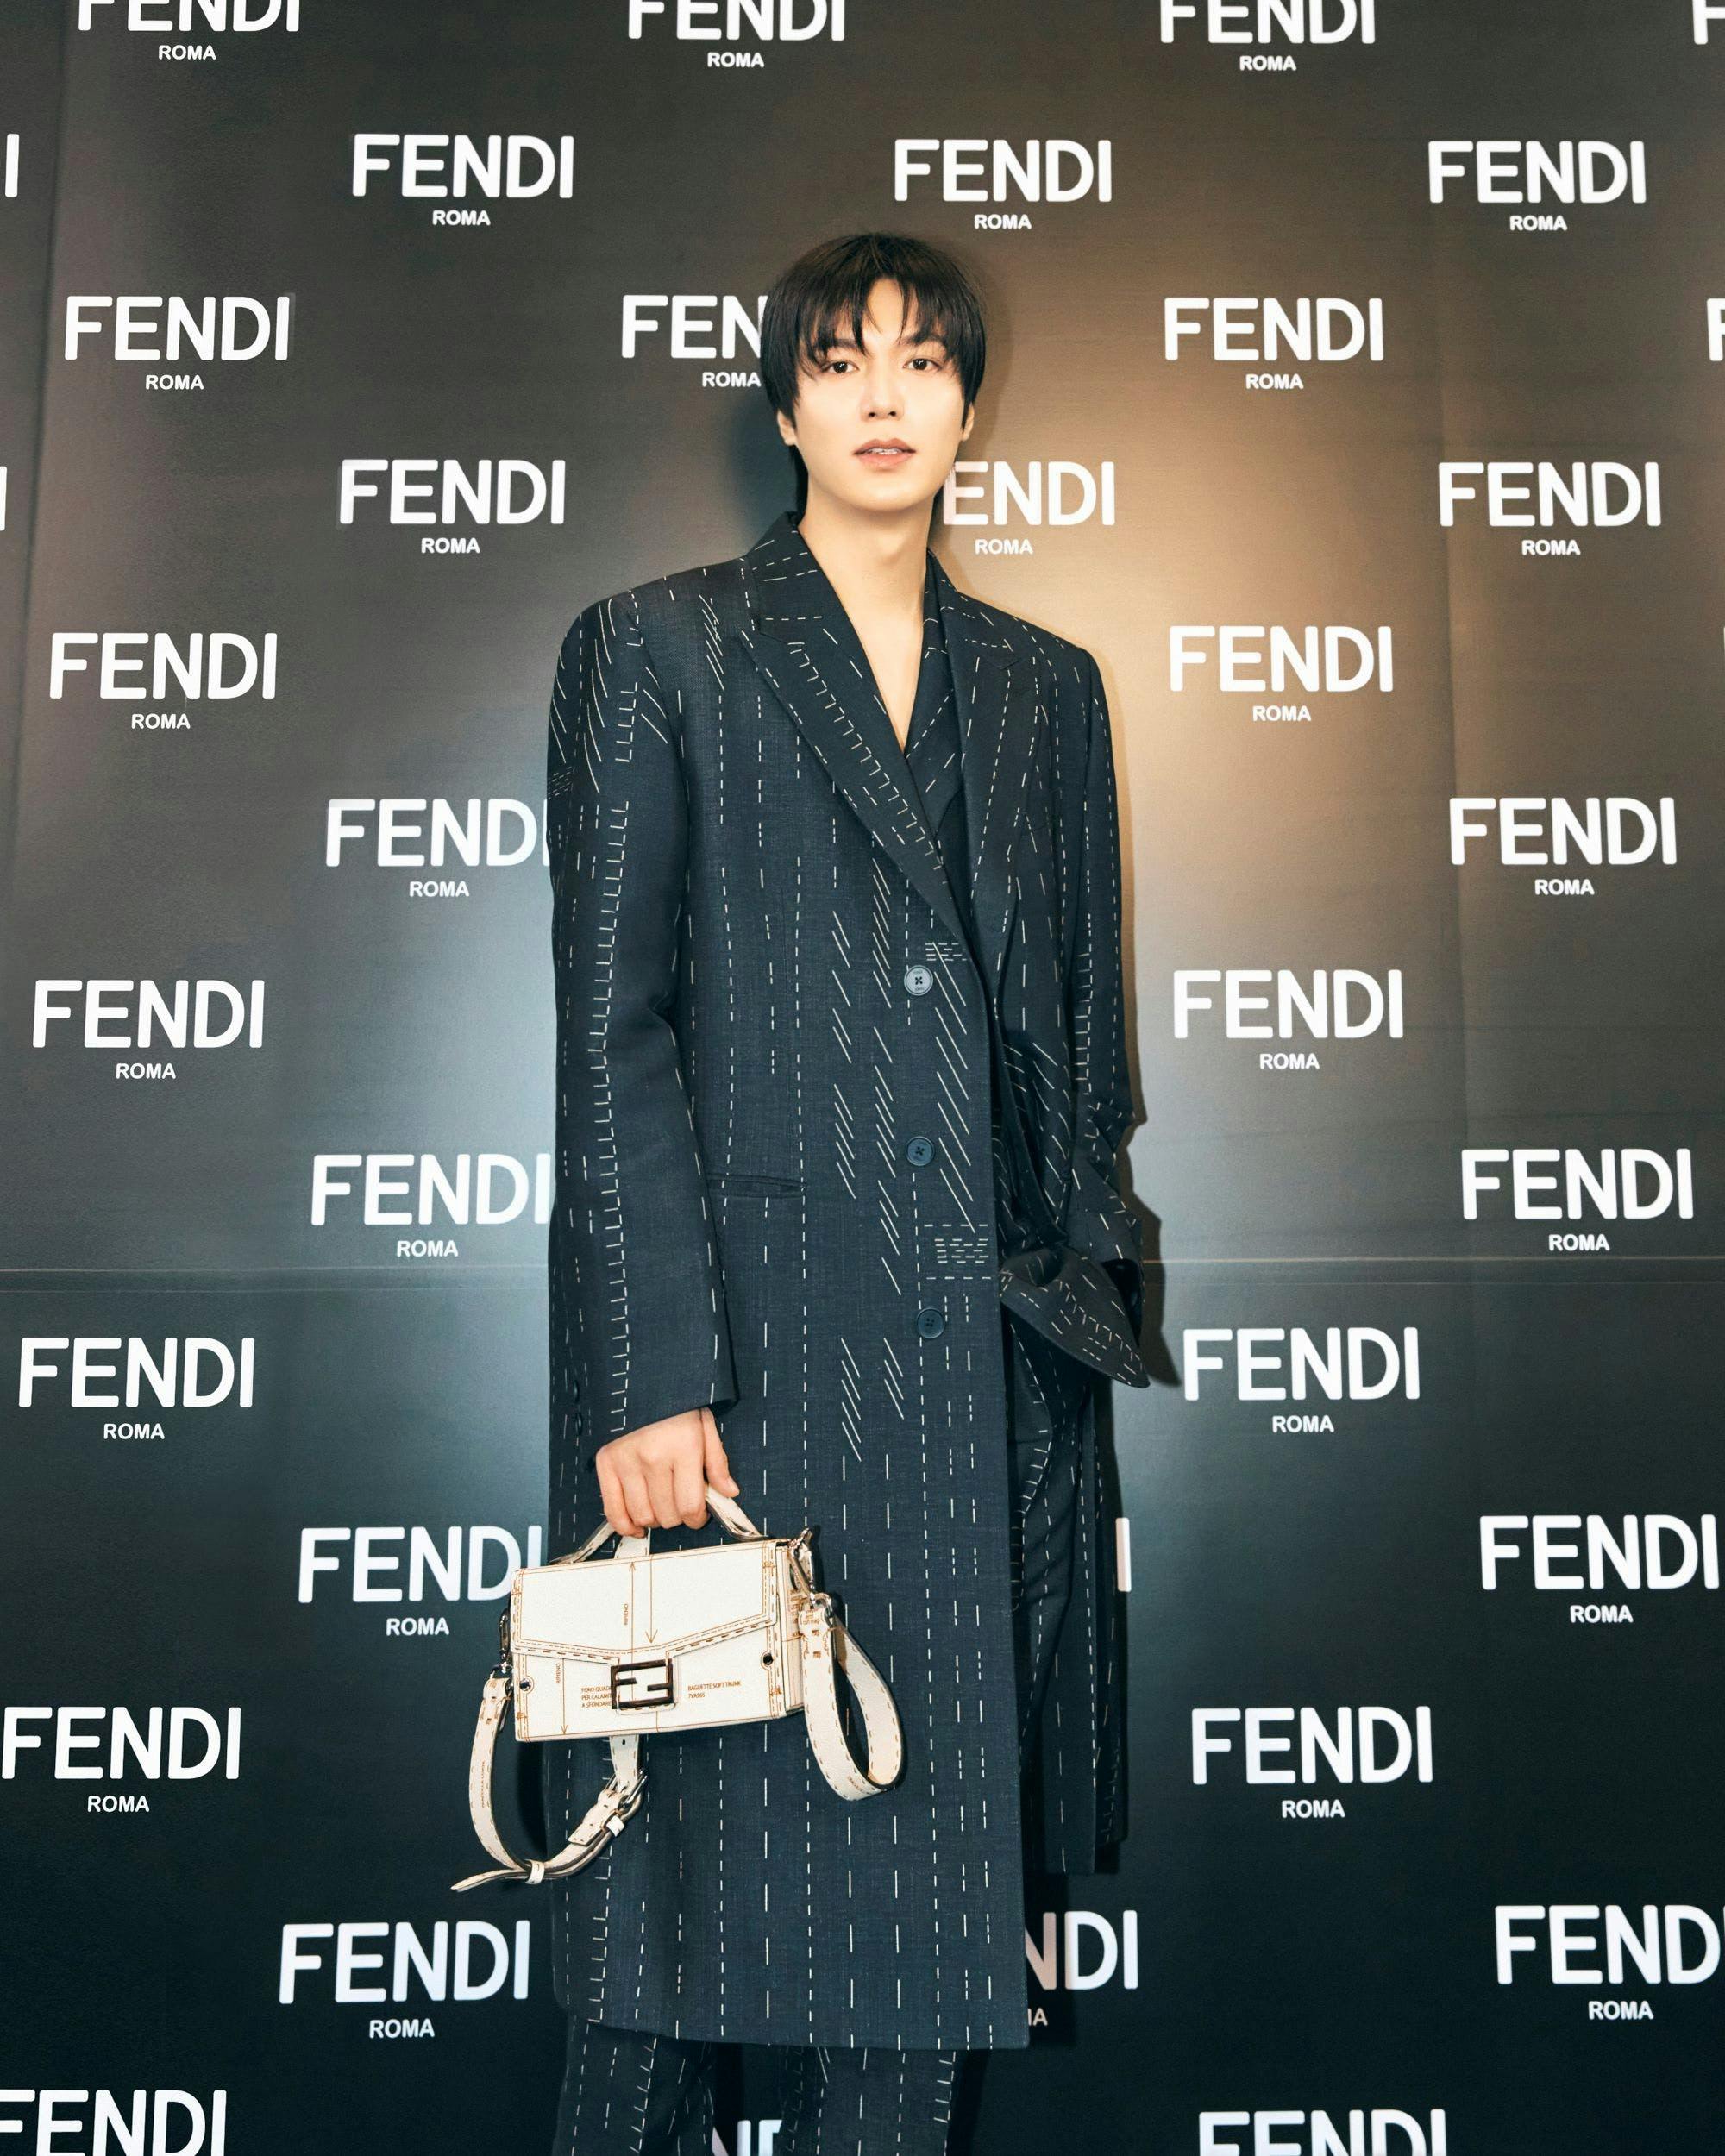 accessories bag handbag coat formal wear suit standing purse fashion black hair